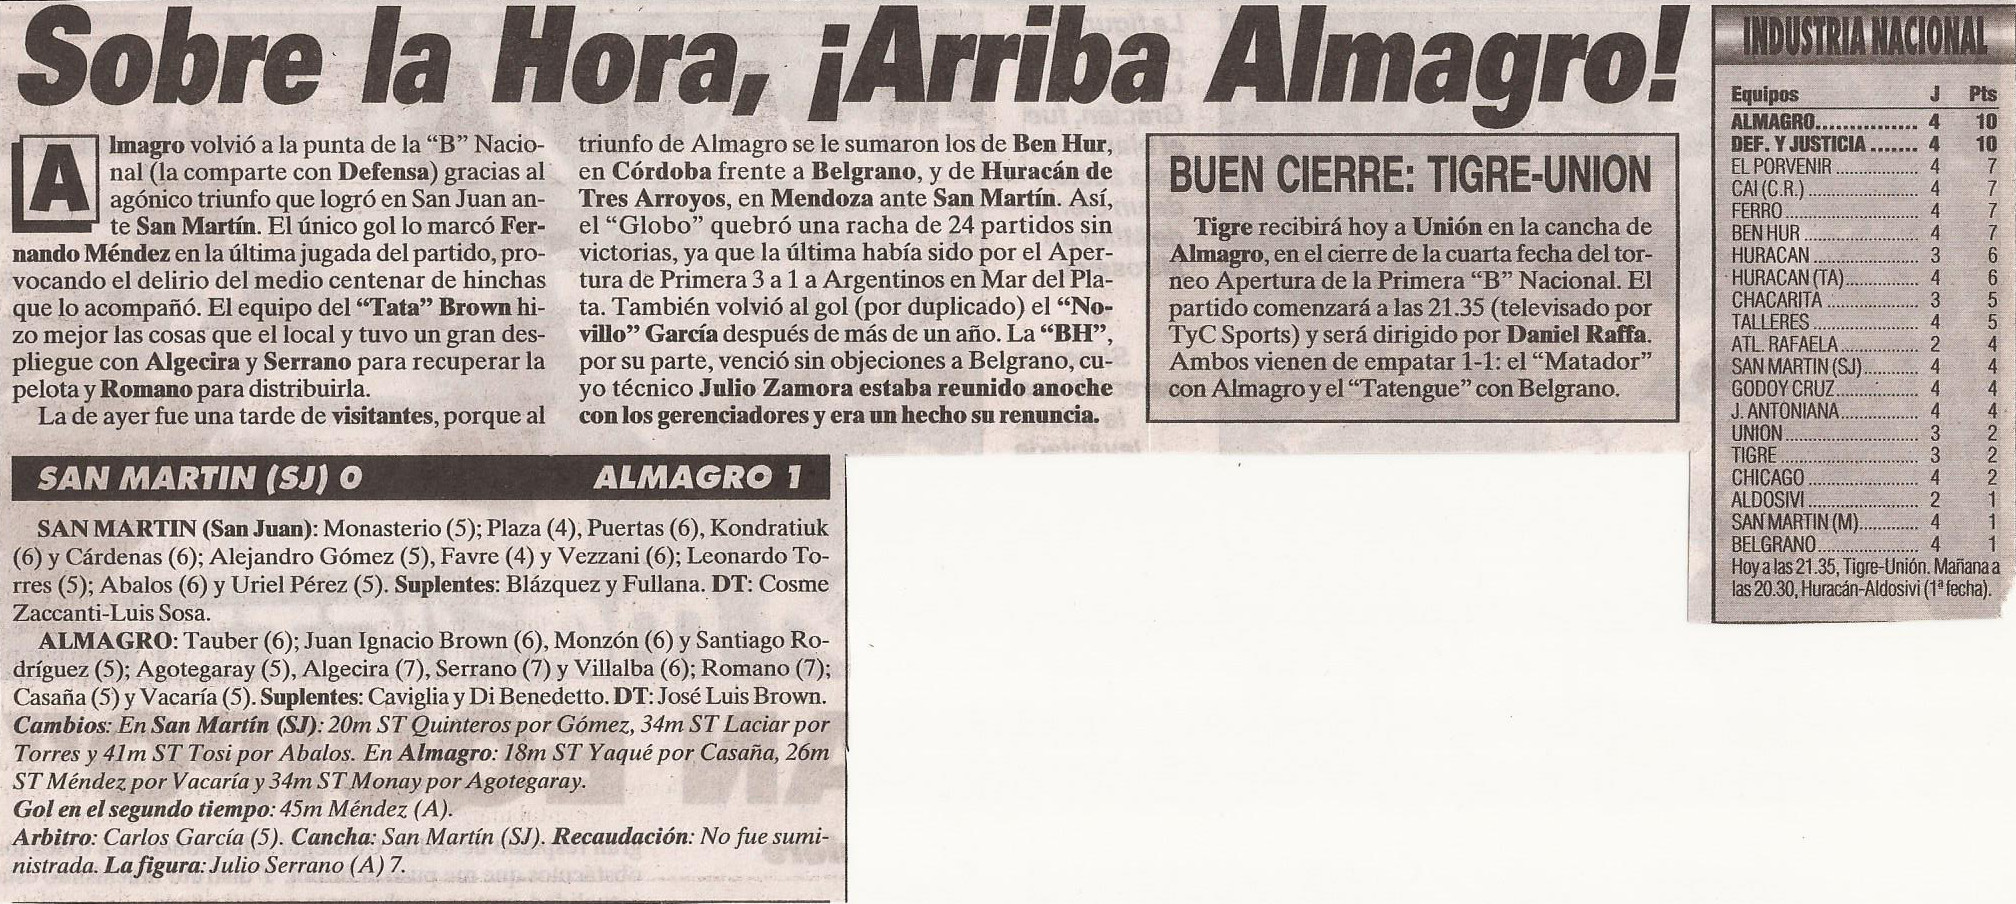 2005-06 Nacional B - San Martin SJ vs Almagro - Diario Cronica